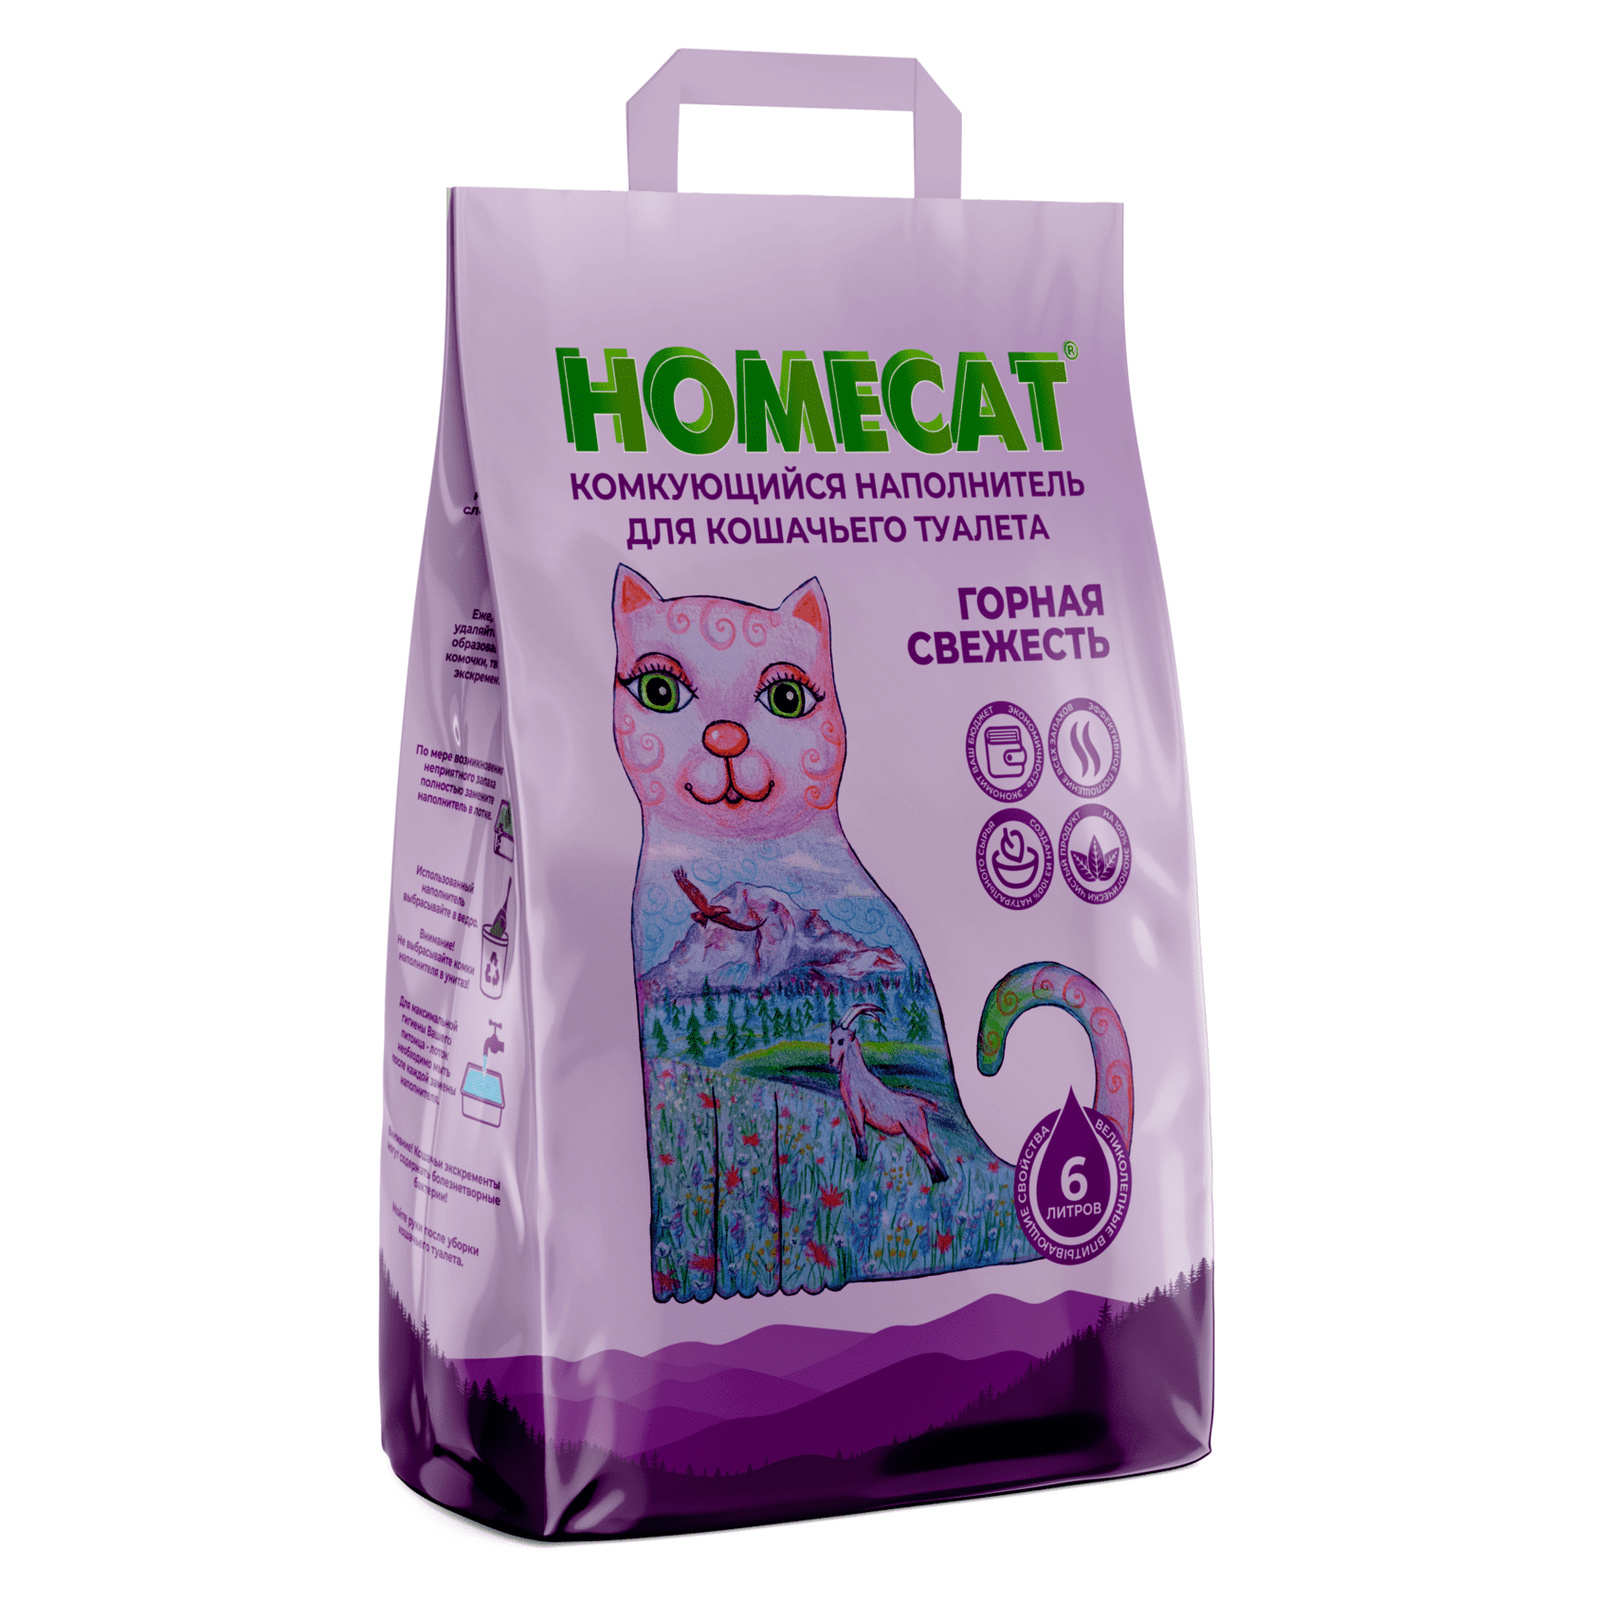 Homecat наполнитель Homecat наполнитель комкующийся наполнитель (10 кг) фото